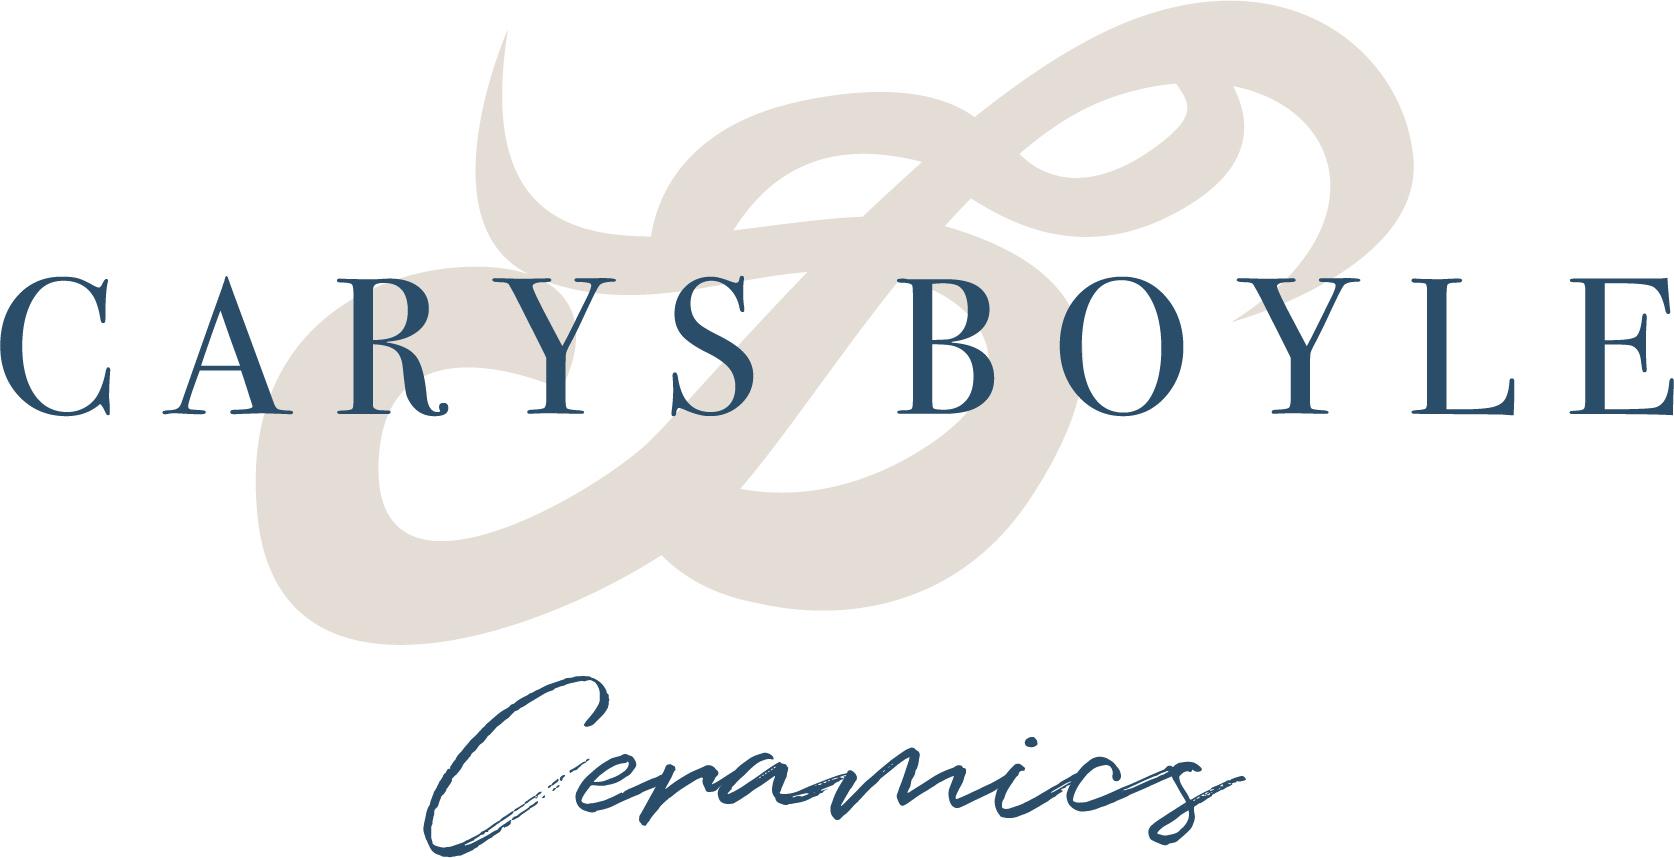 Carys Boyle Ceramics